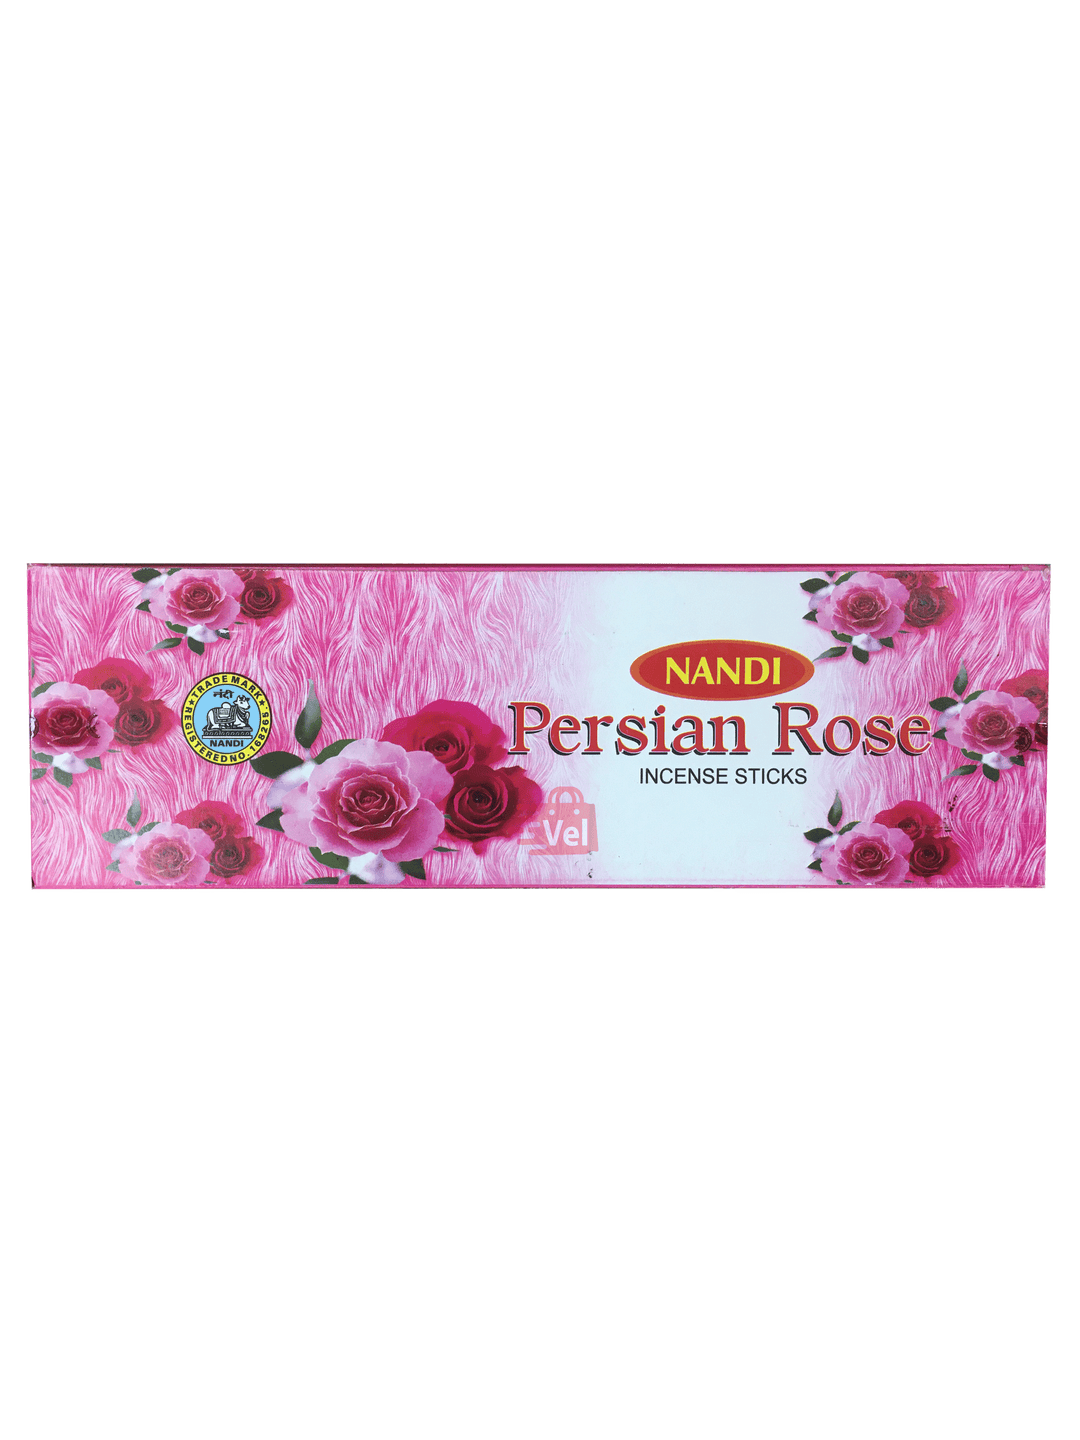 Nandi Persian Rose Incense Sticks